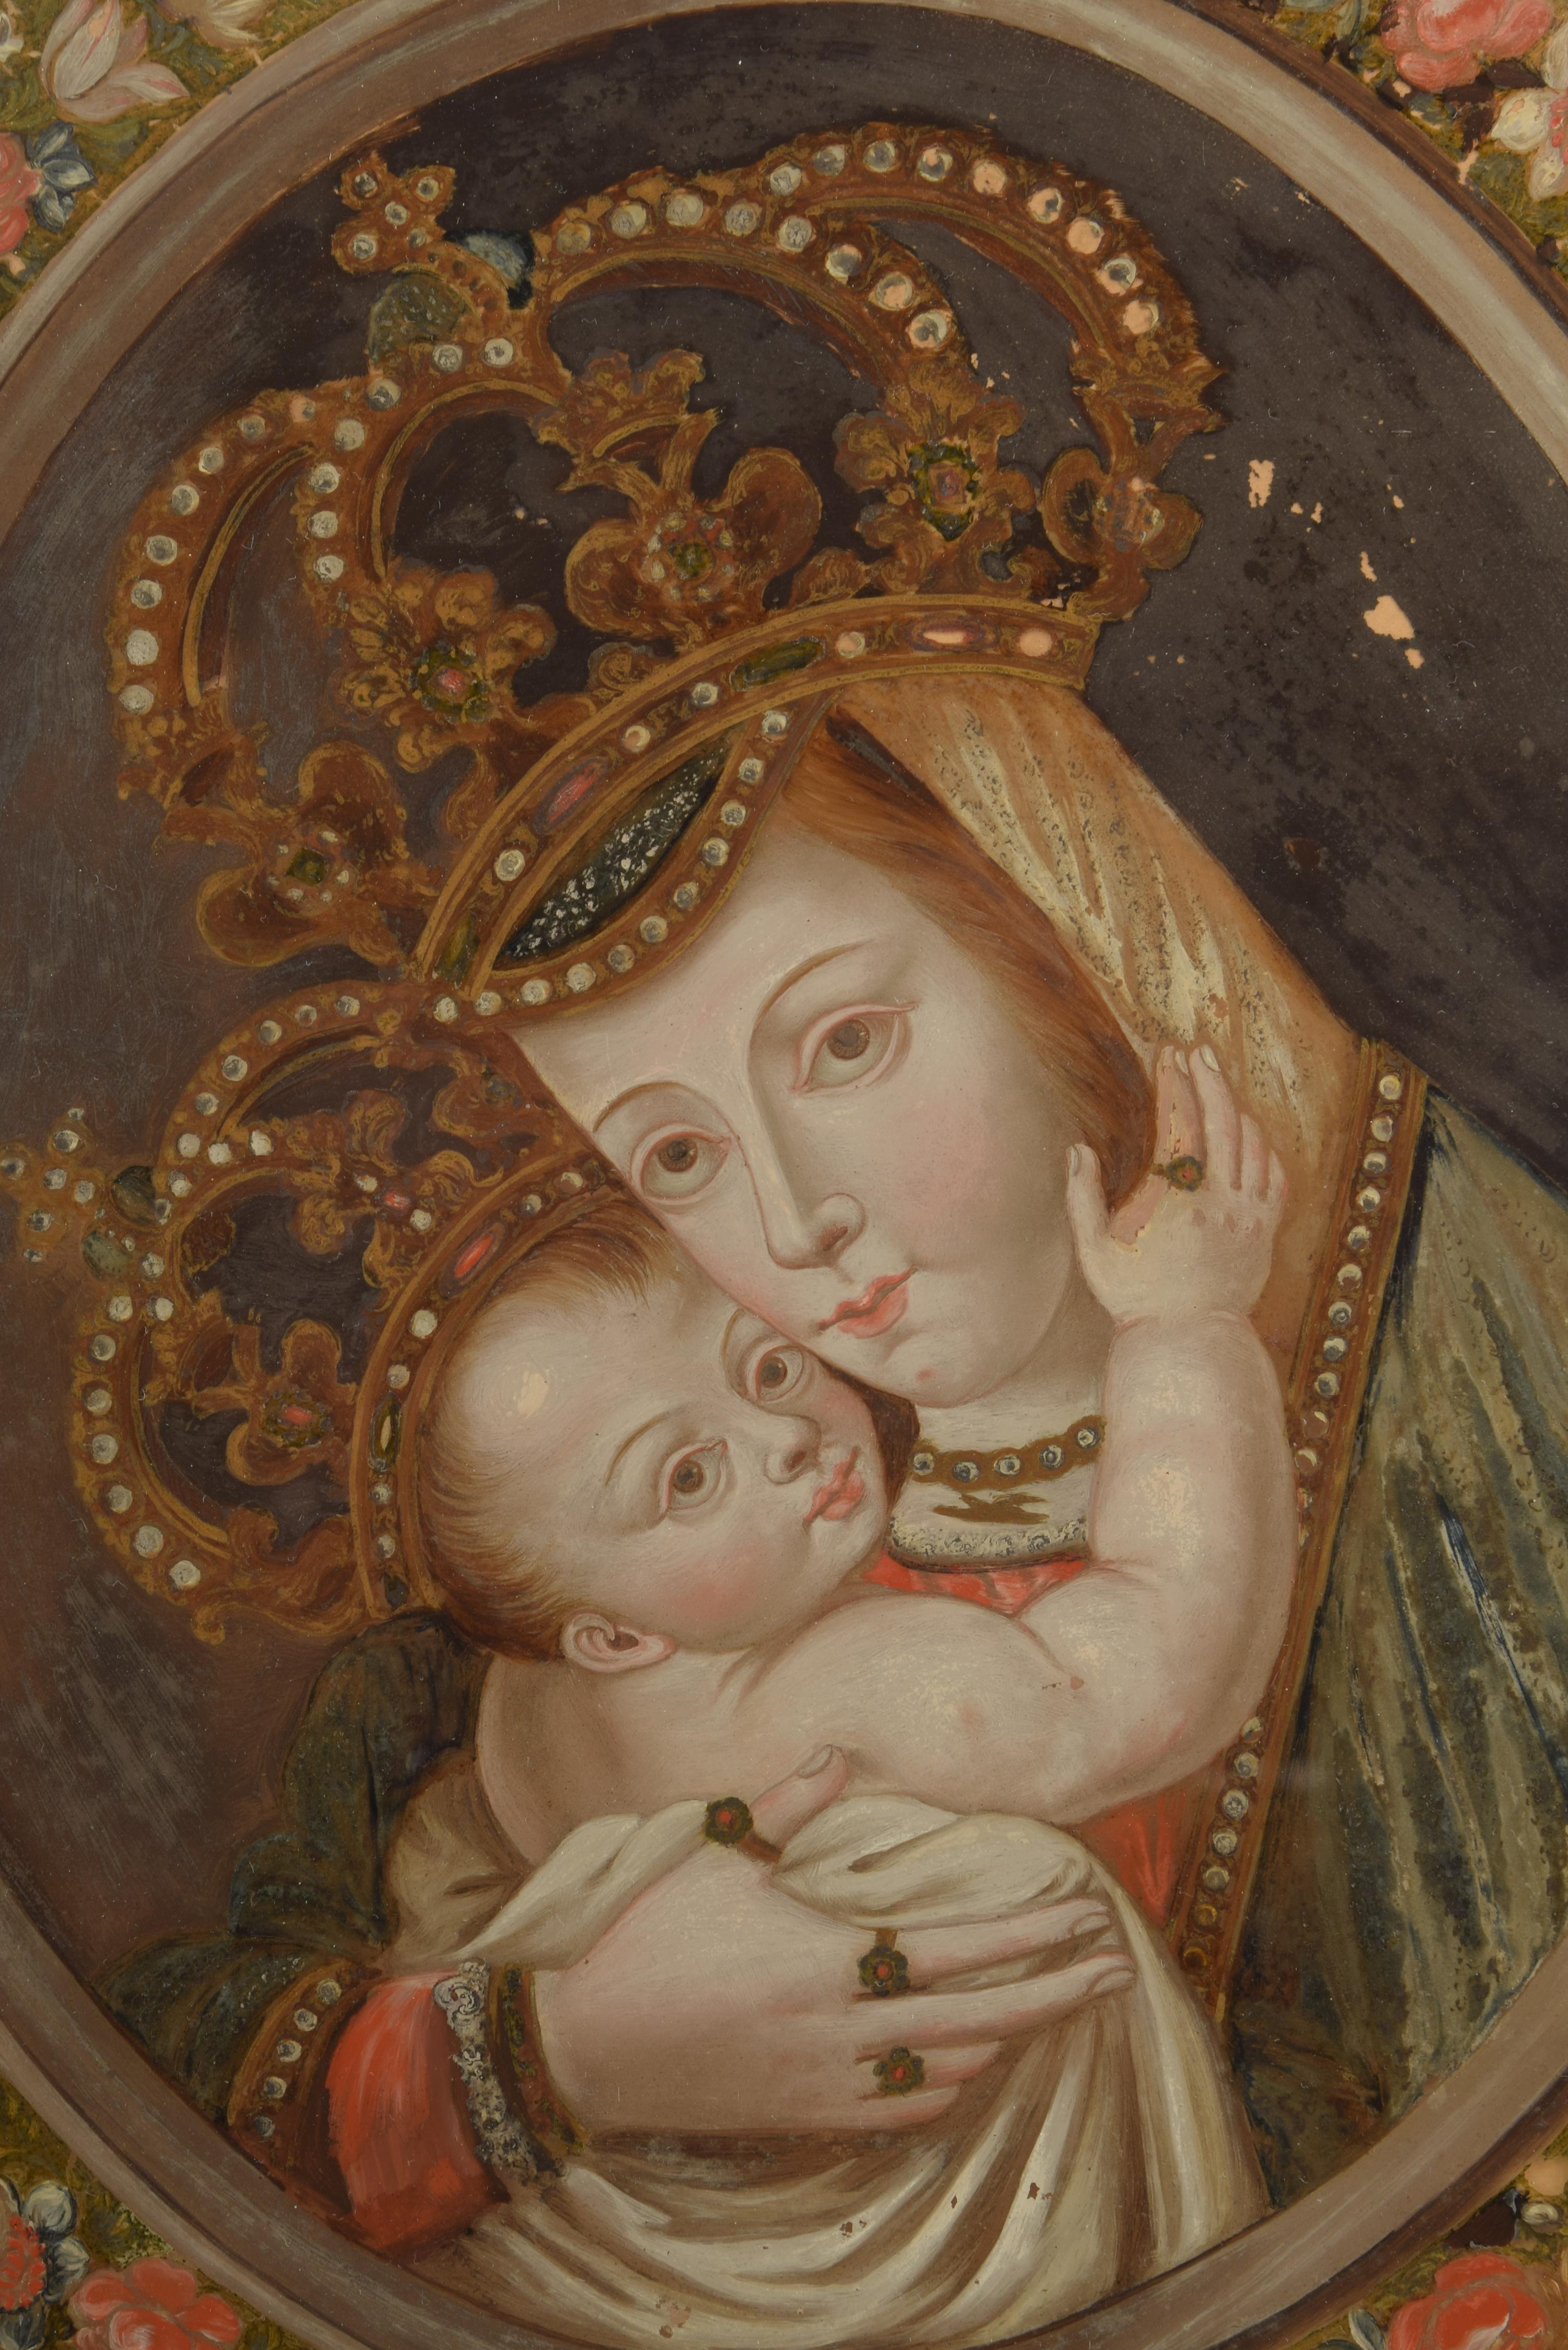 Spanish Our Lady of Bethlehem, Paint on Glass, Wood, Etc, 18th Century